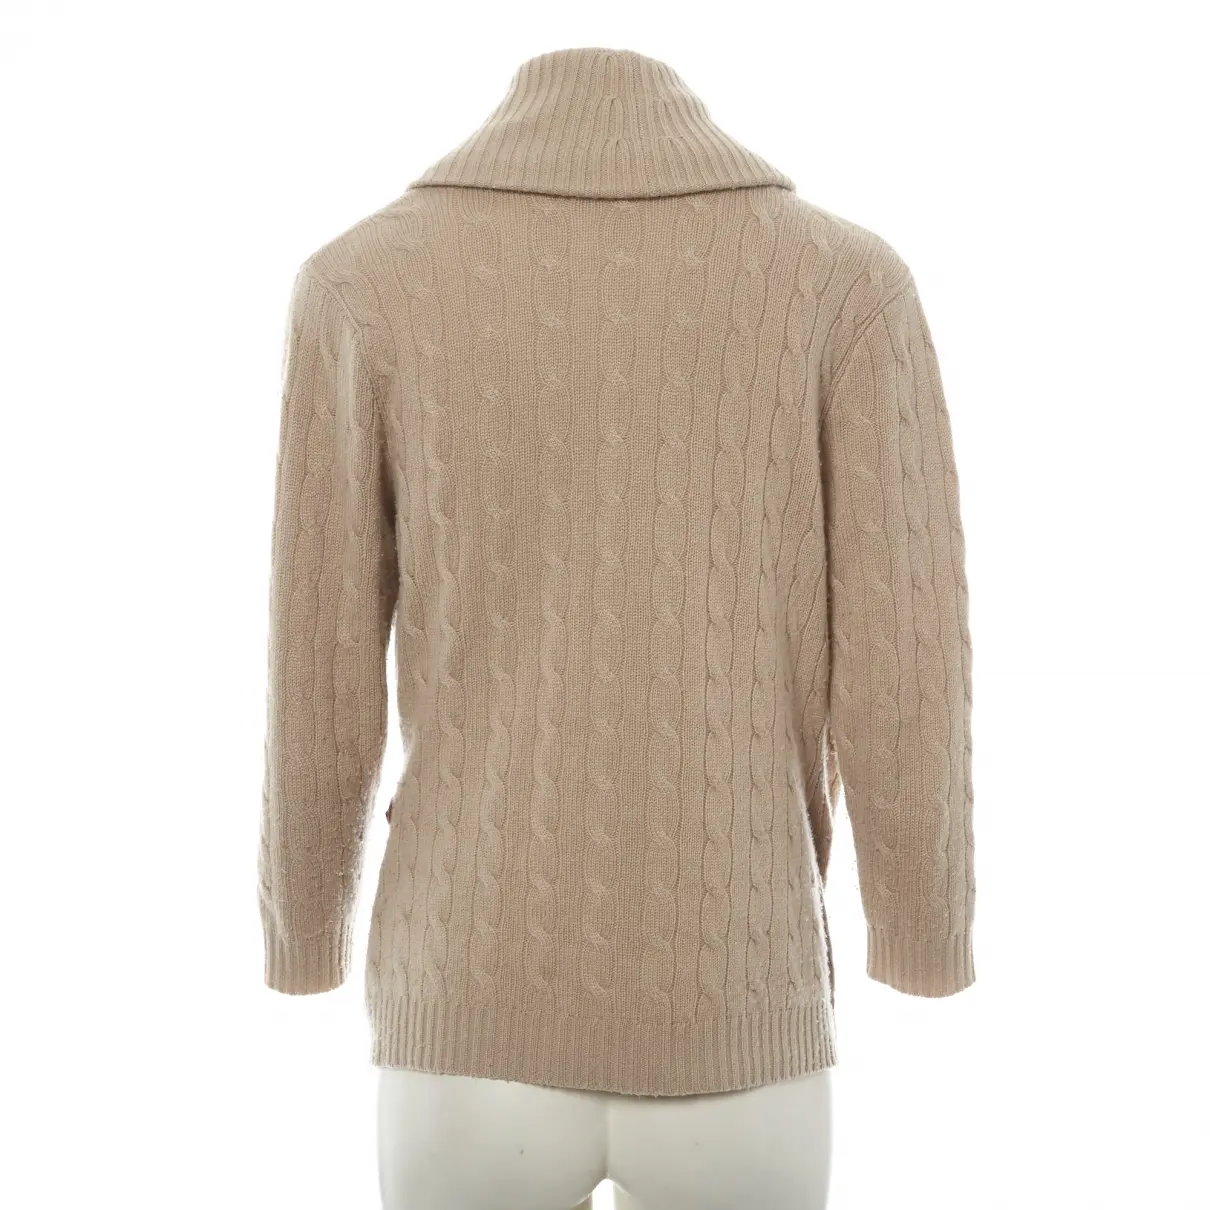 Buy Ralph Lauren Collection Cashmere jumper online